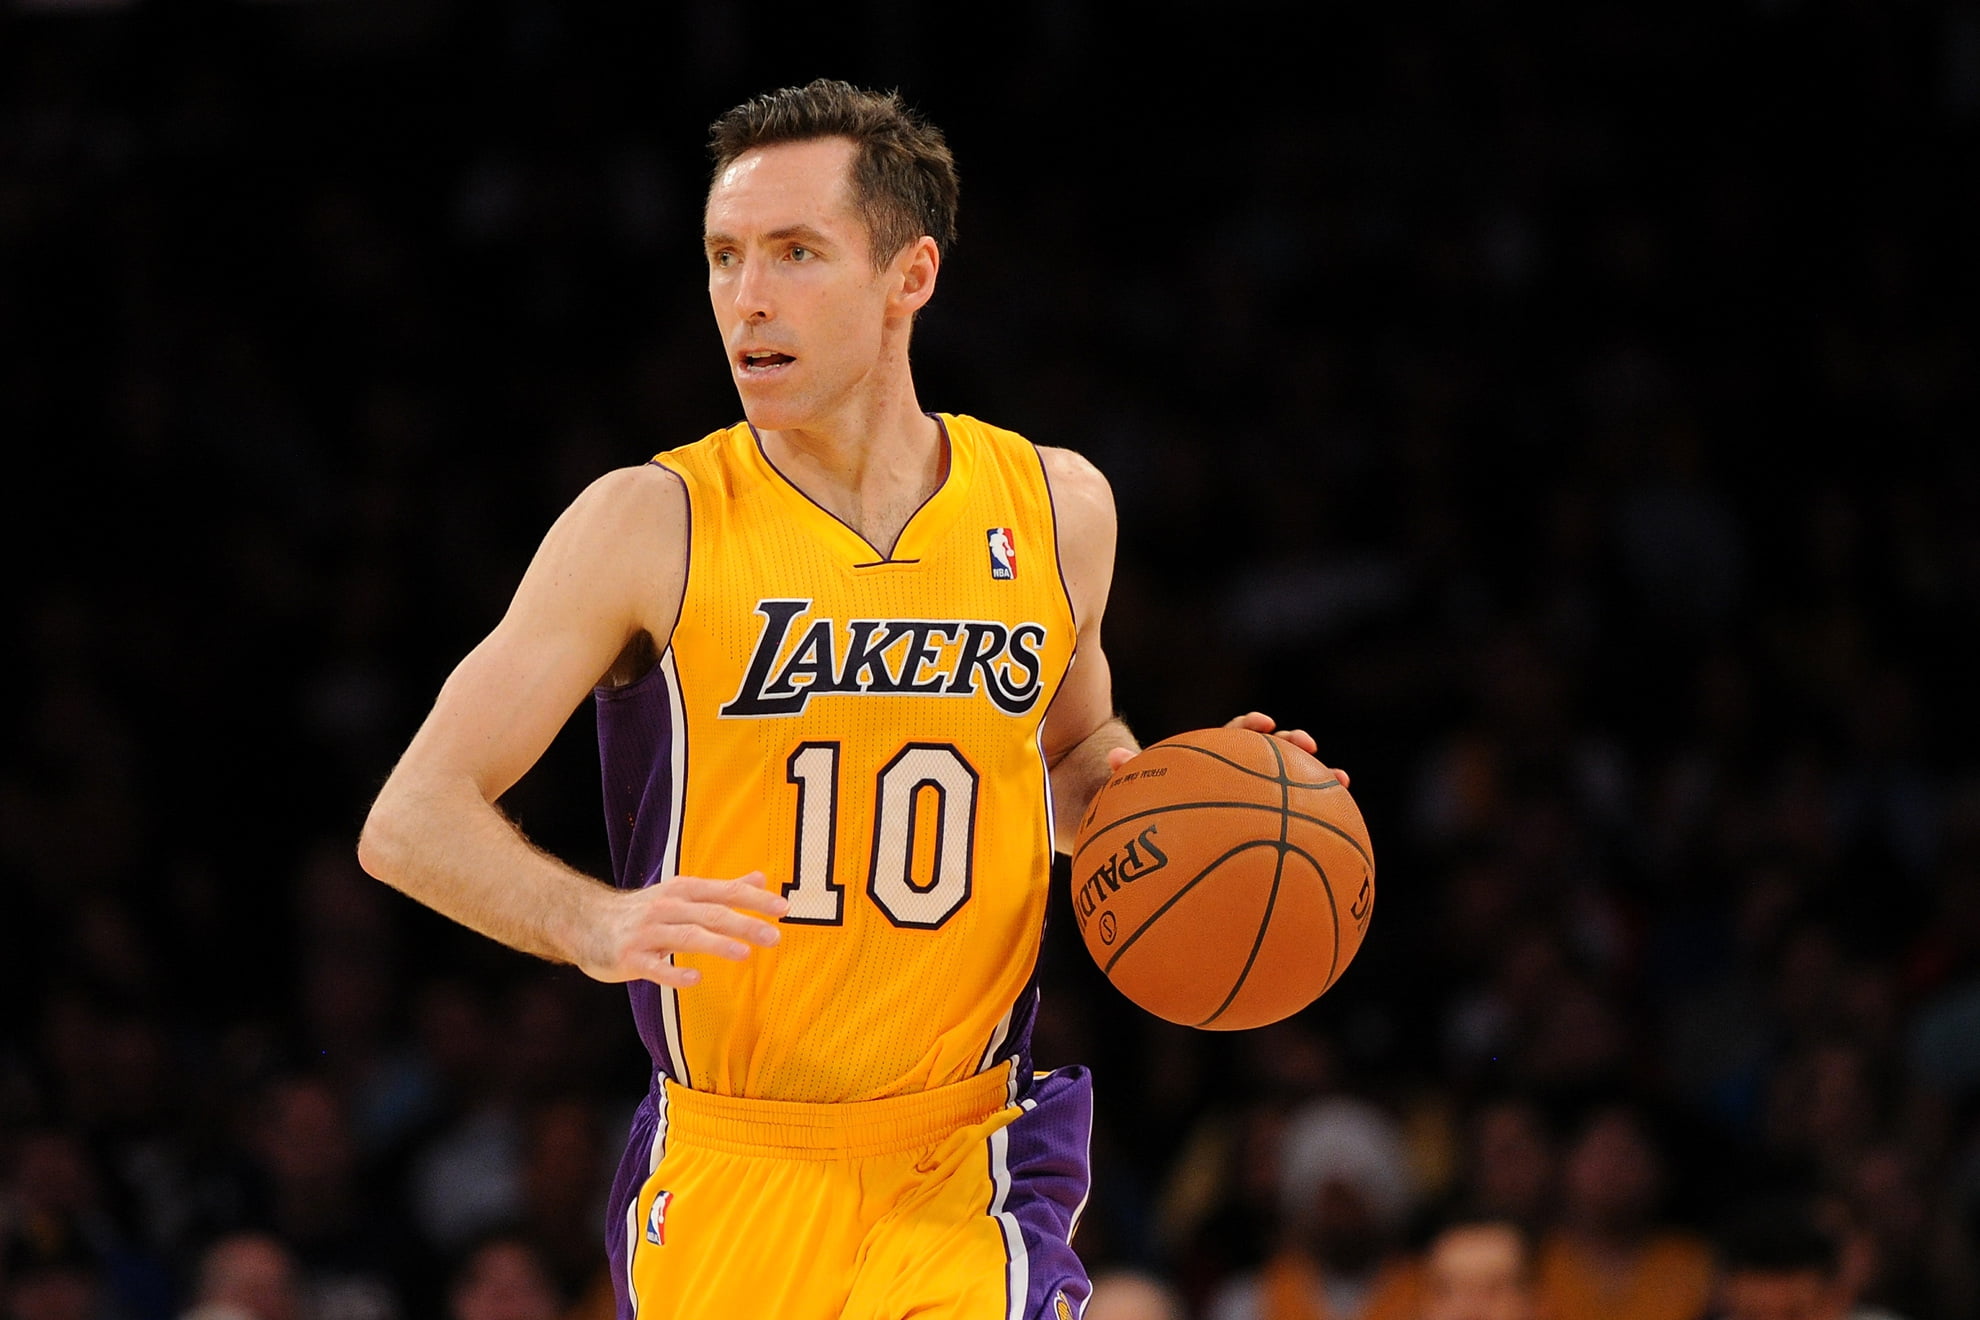 Los Angeles Lakers no. 10 player dribbling Spalding ball